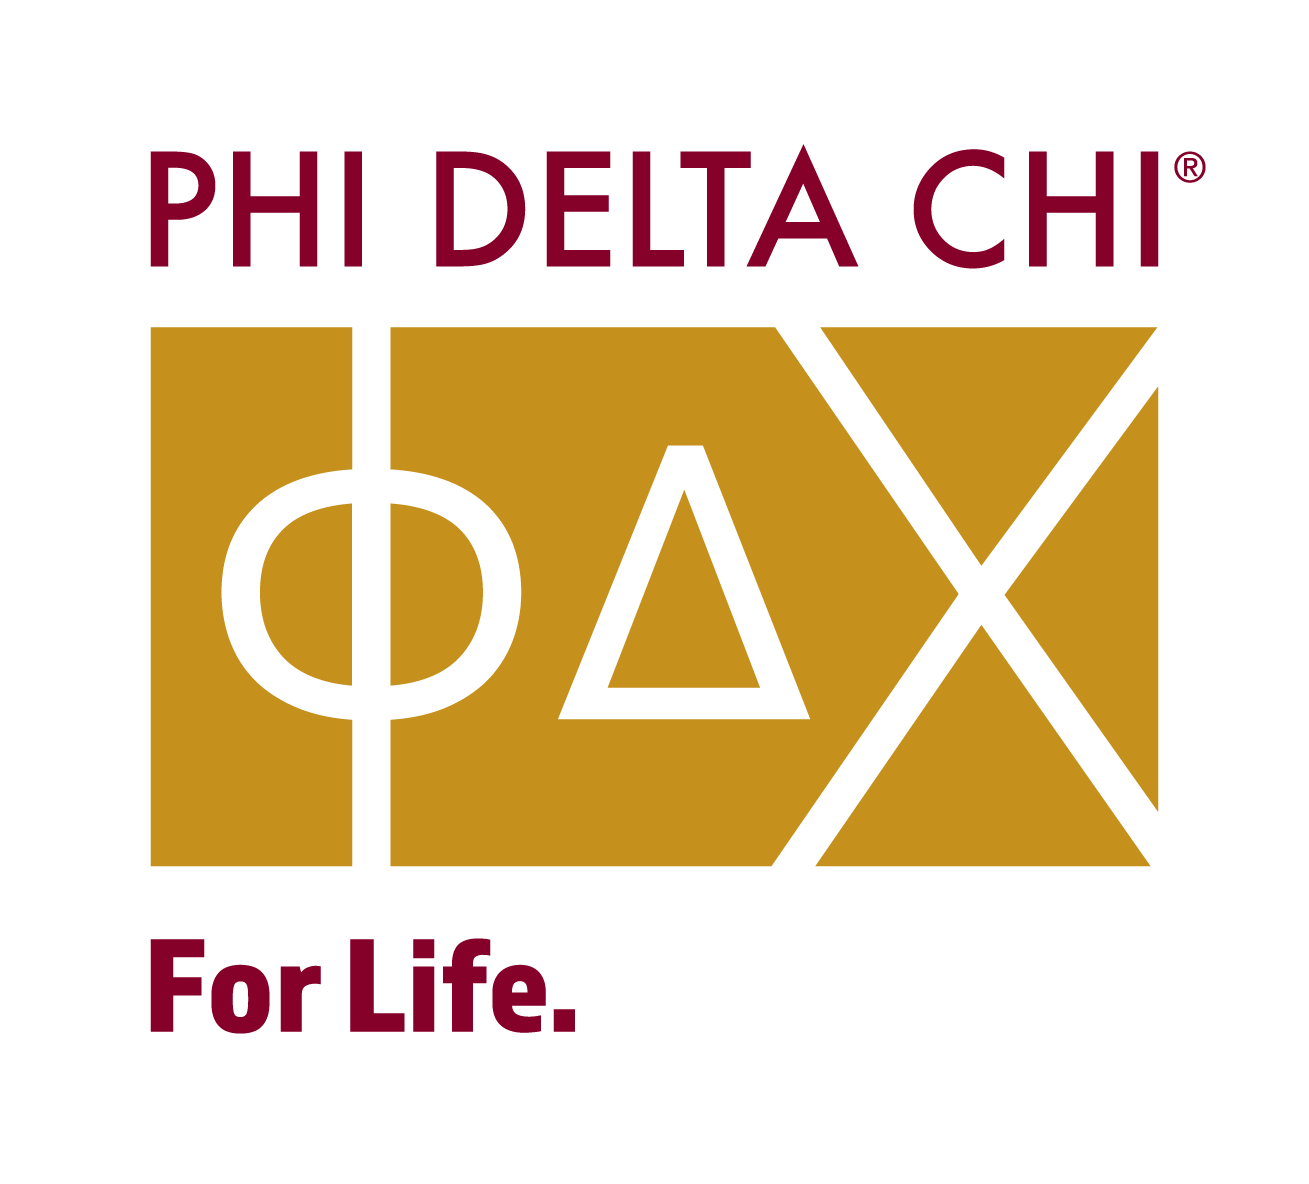 Phi Logo - PDC Logo and Image Usage - Phi Delta Chi